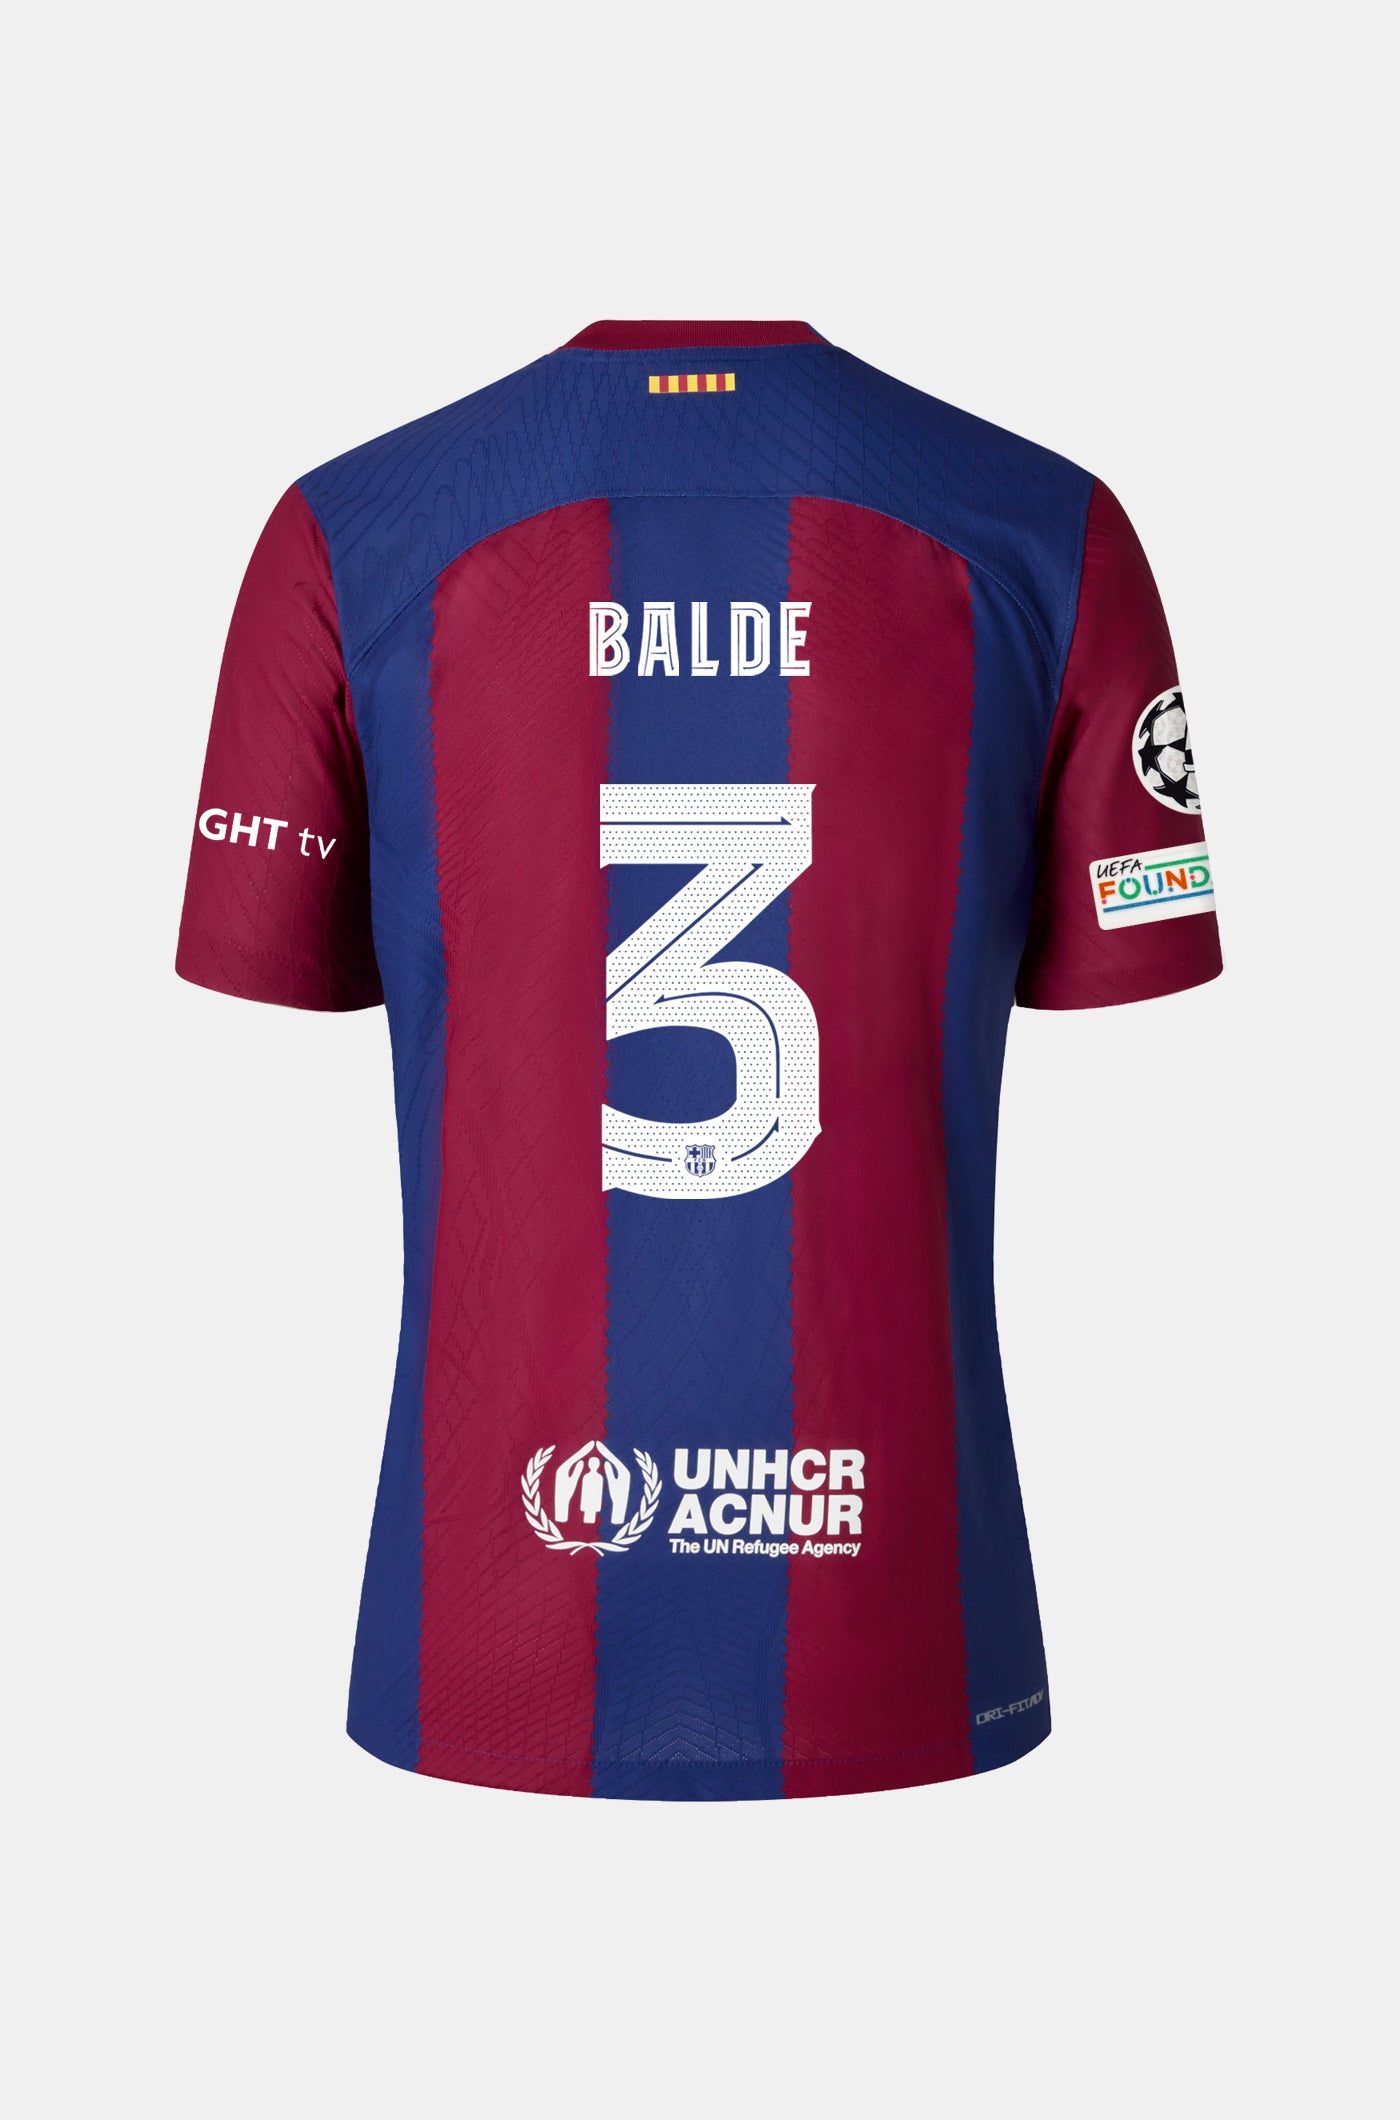 UCL FC Barcelona home shirt 23/24 Player's Edition  - BALDE